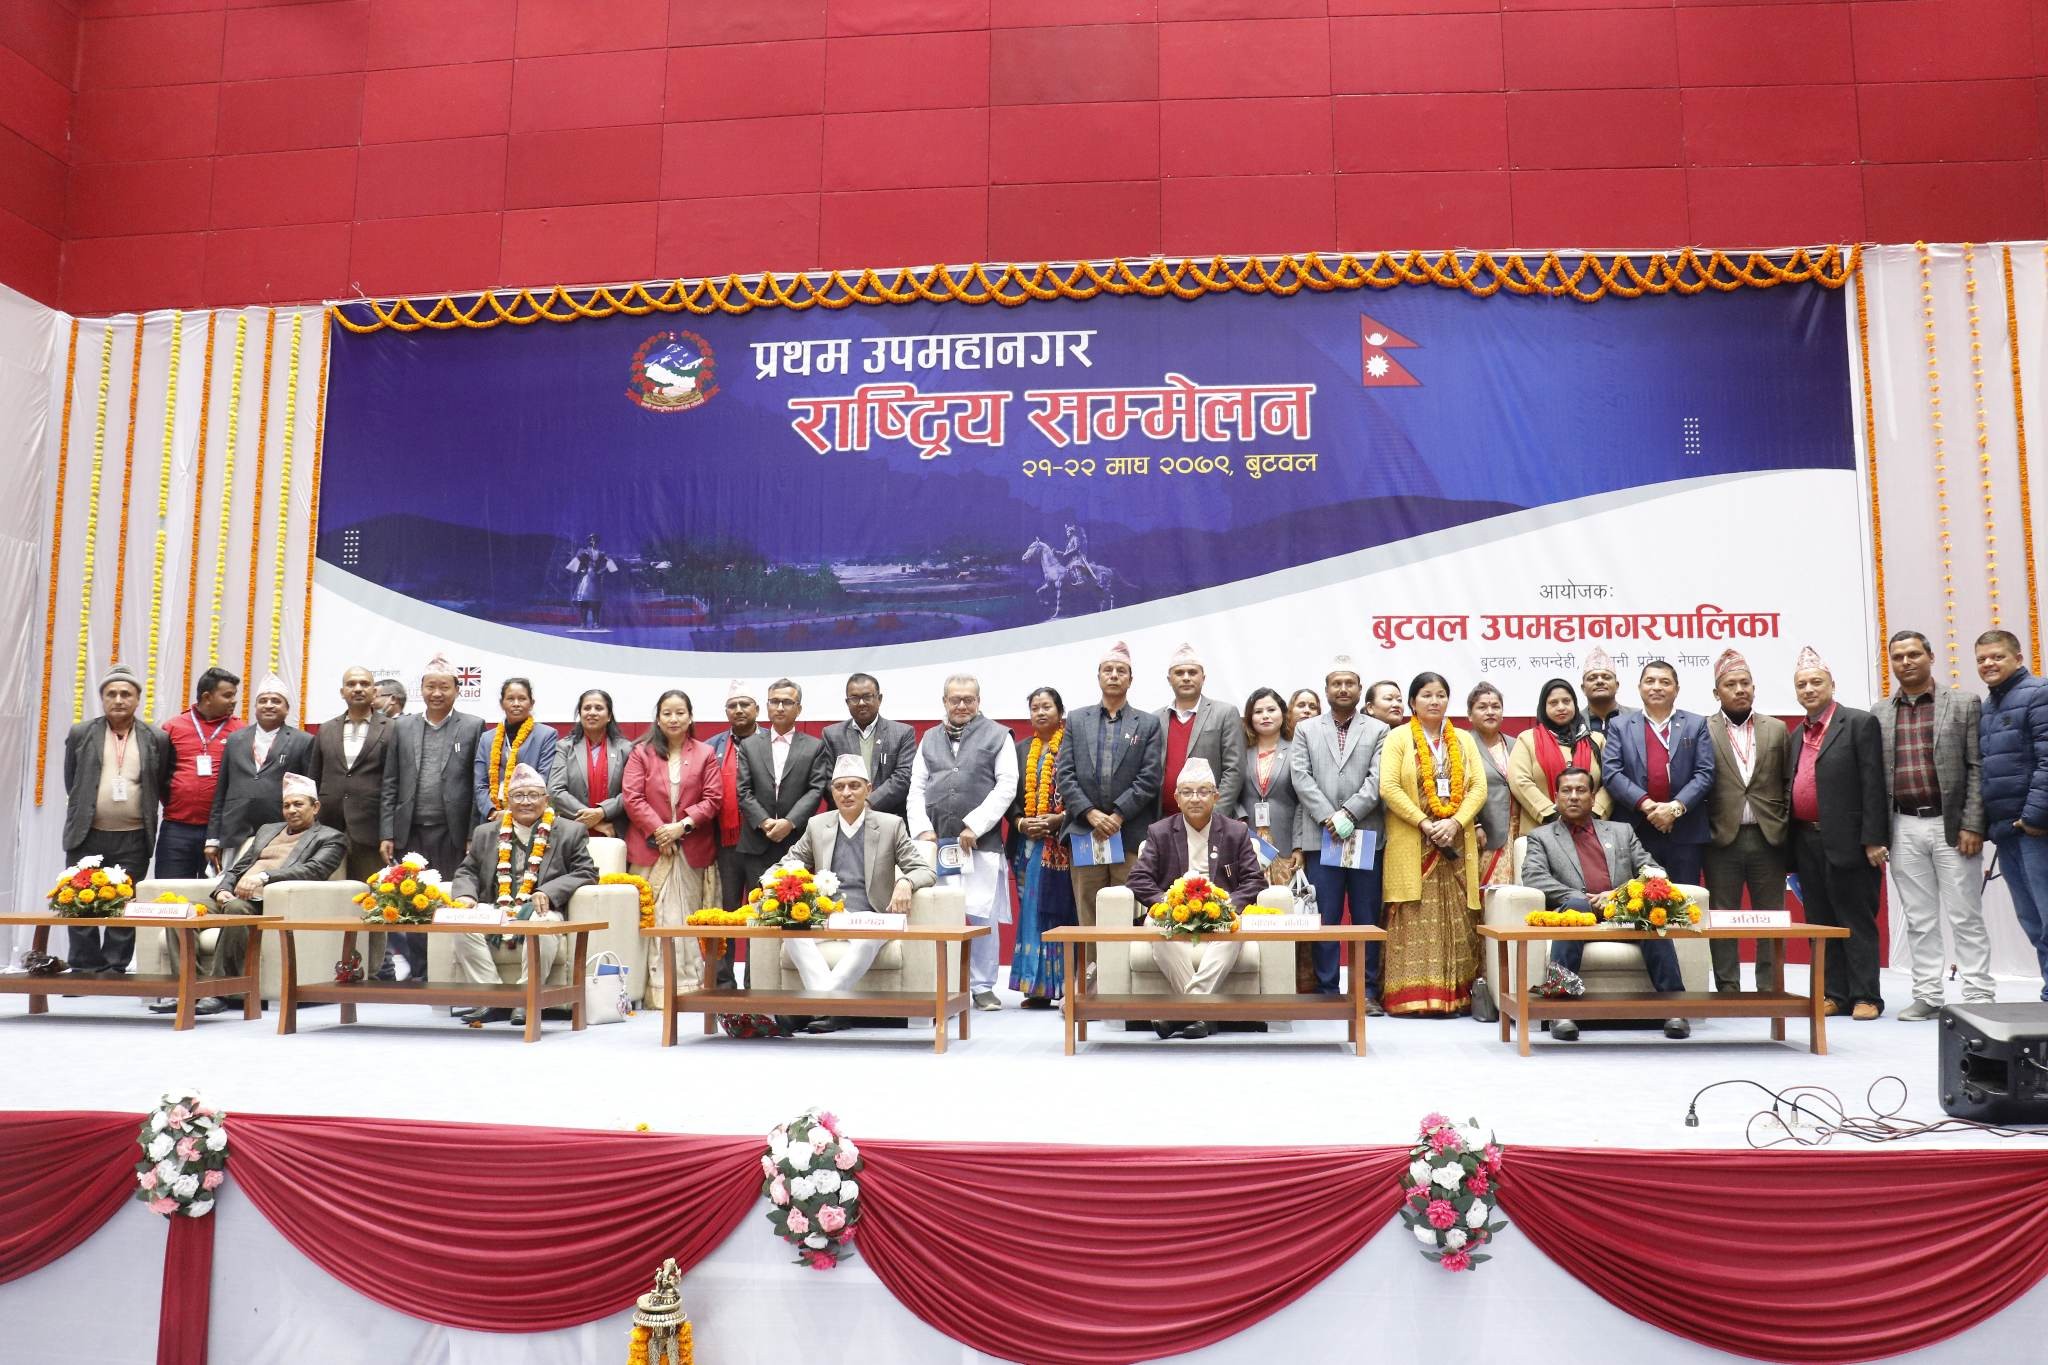 संघीयता कार्यान्वयनमा स्थानीय सरकारको महत्वपूर्ण भूमिका : लुम्बिनी प्रदेश प्रमुख शेरचन